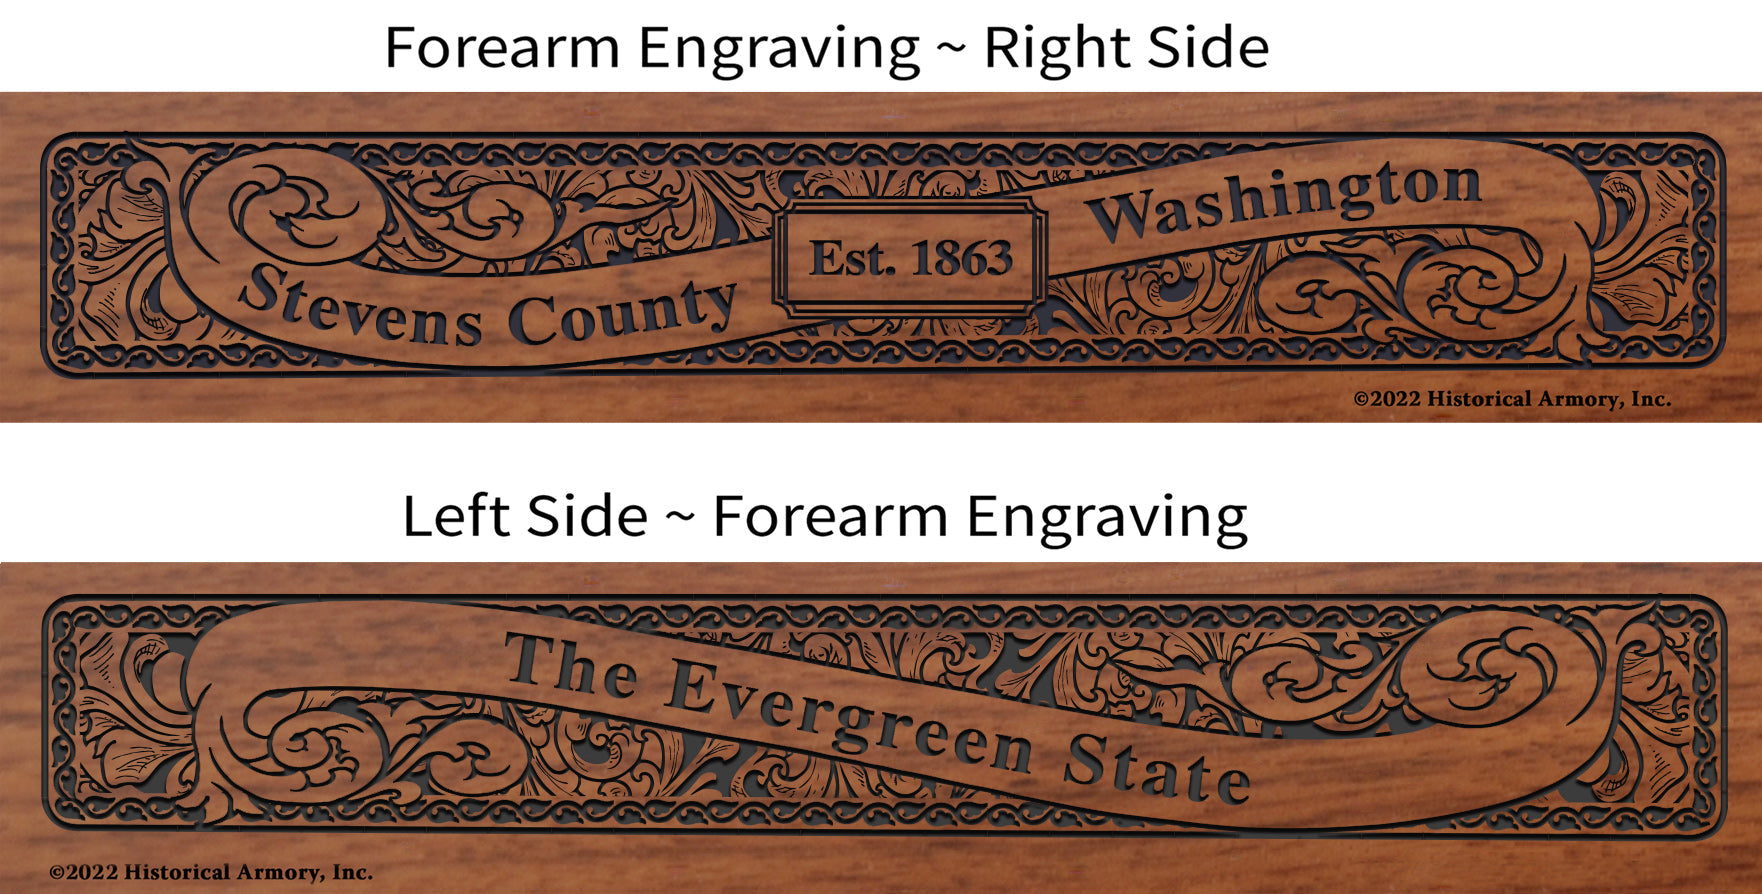 Stevens County Washington Engraved Rifle Forearm